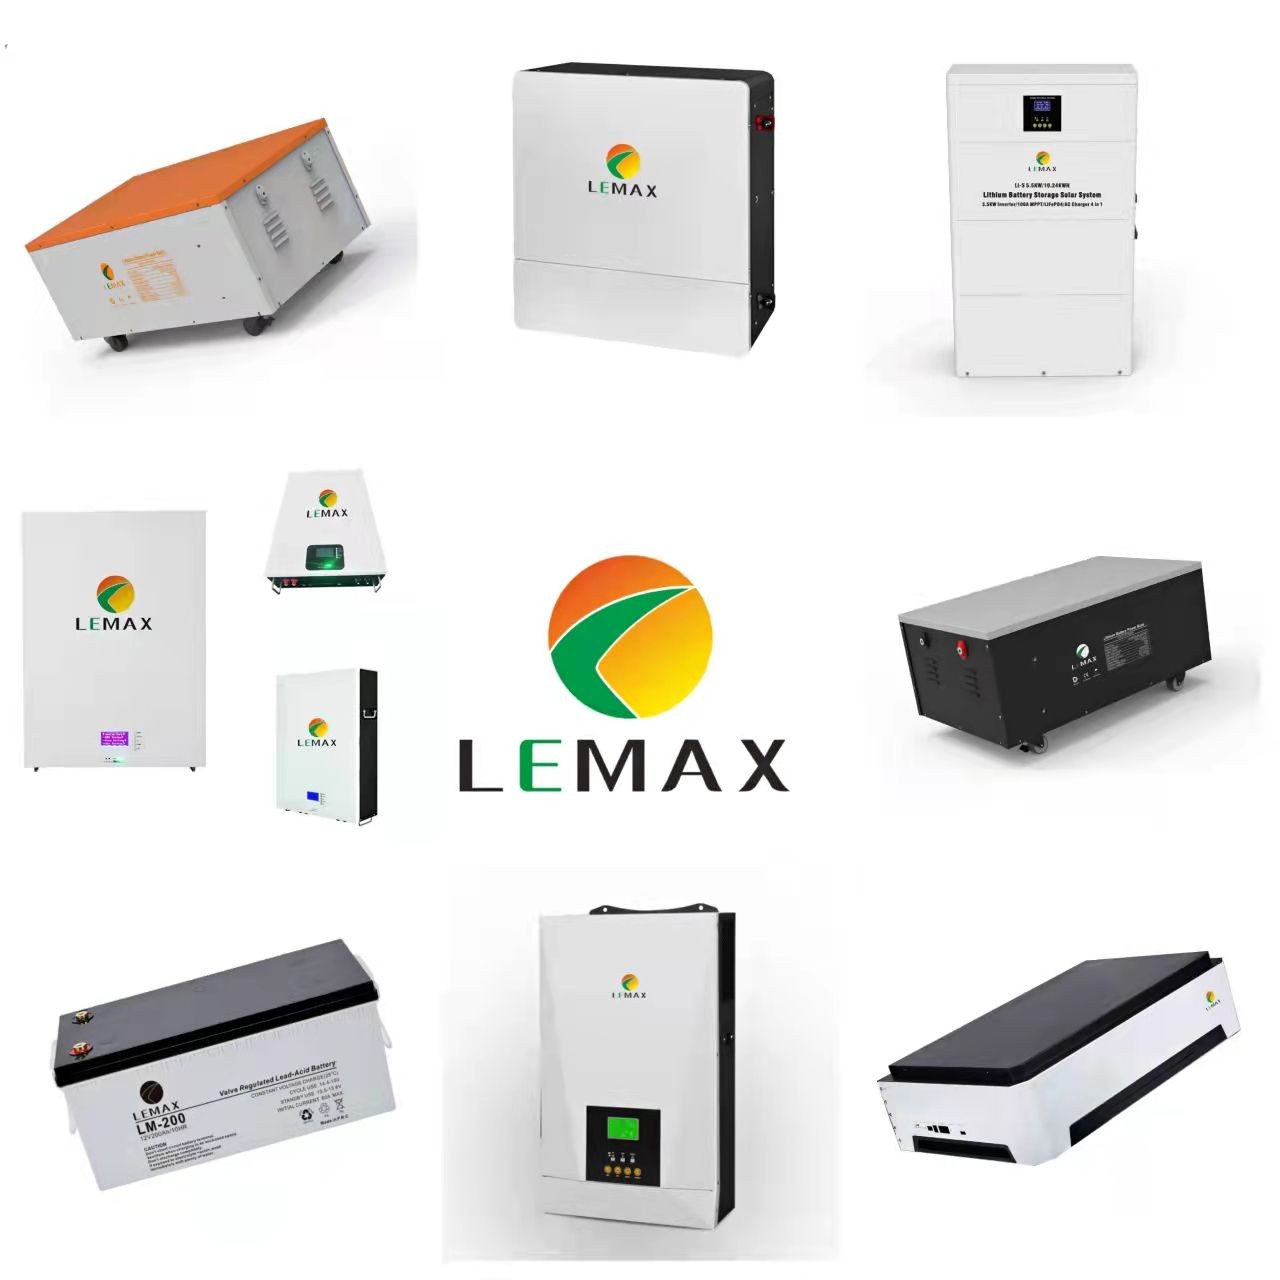 ShenZhen Lemax new energy co.,Ltd